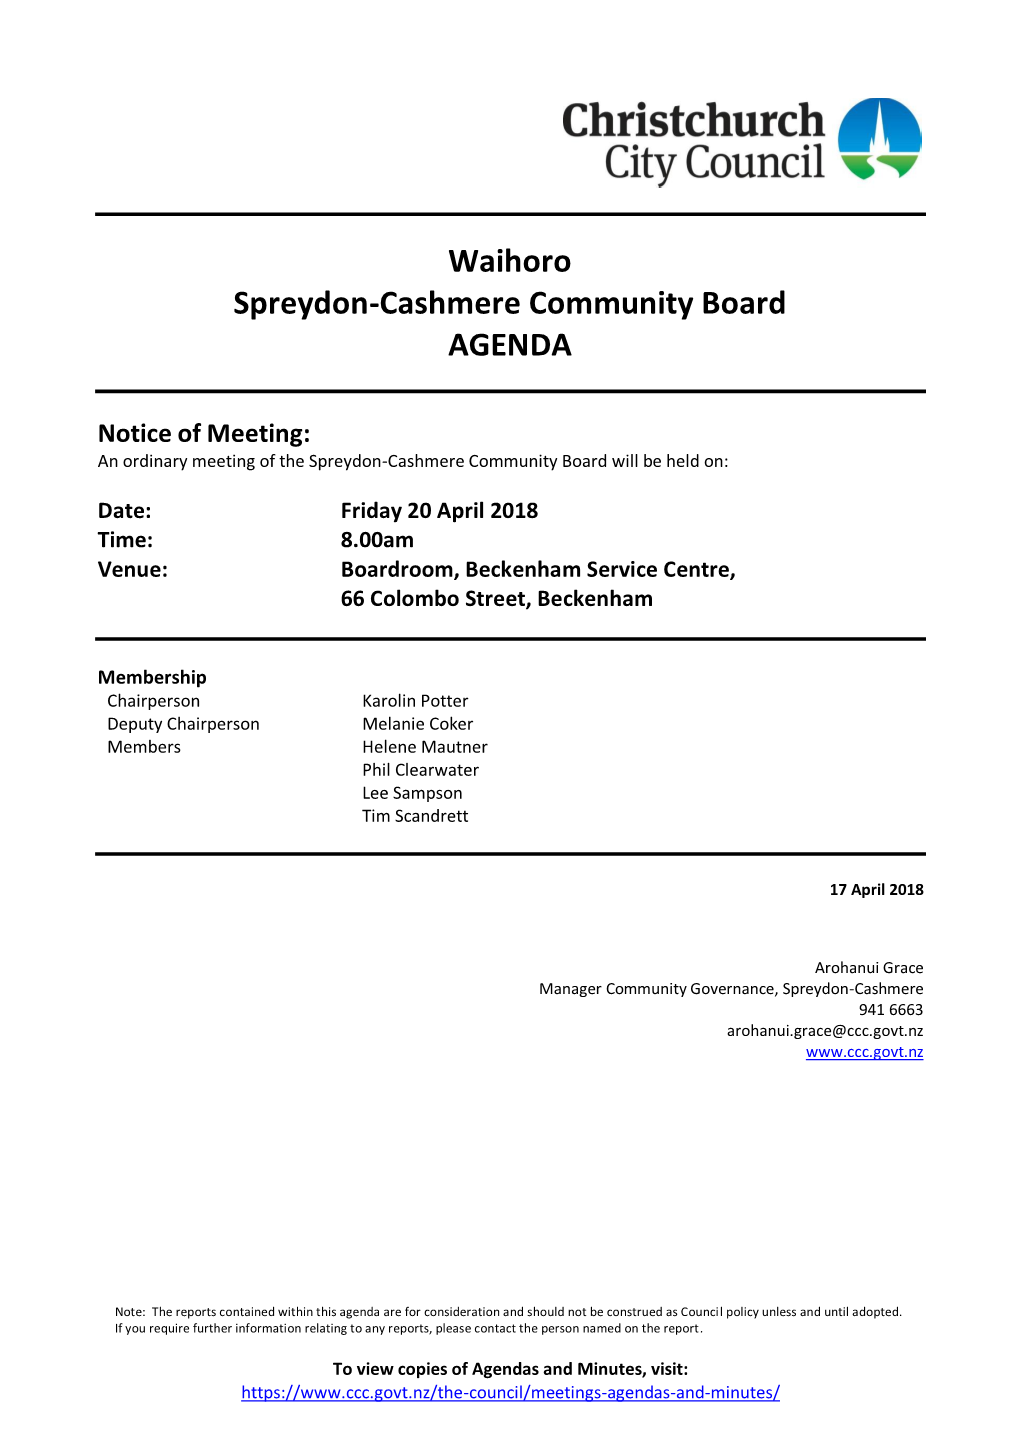 Agenda of Spreydon-Cashmere Community Board